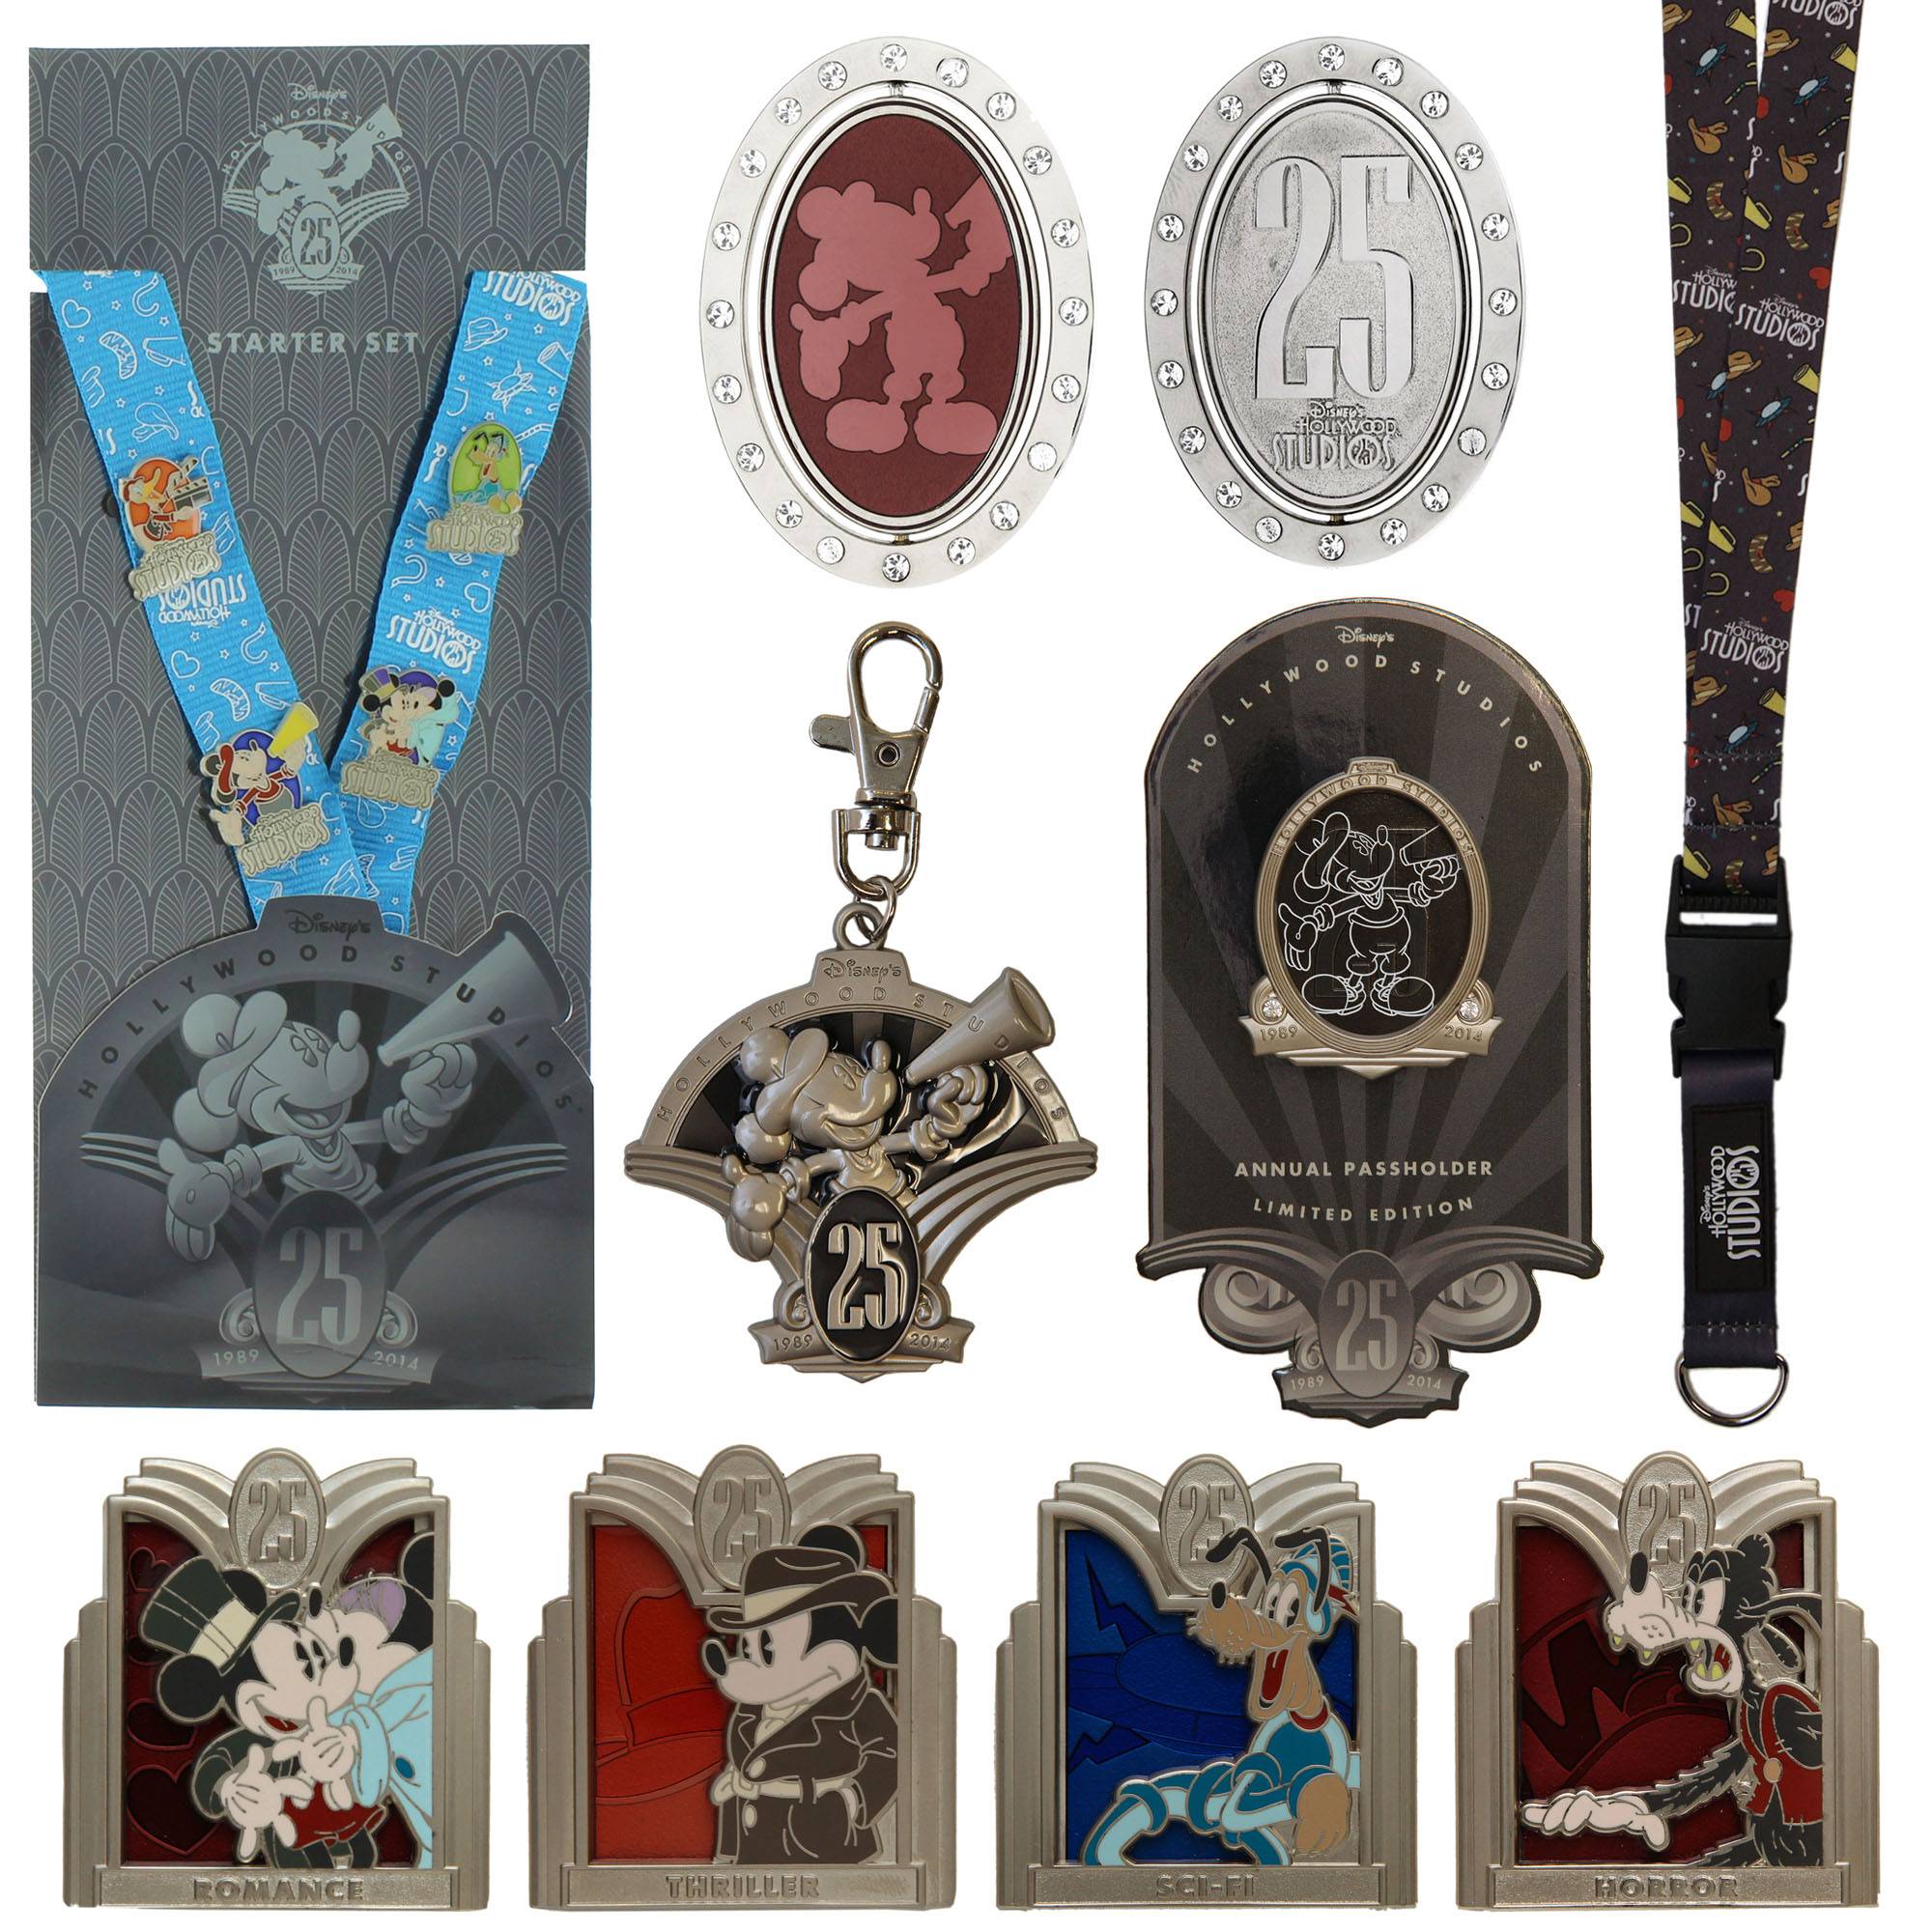 Disney's Hollywood Studios 25th anniversary merchandise - Key chains